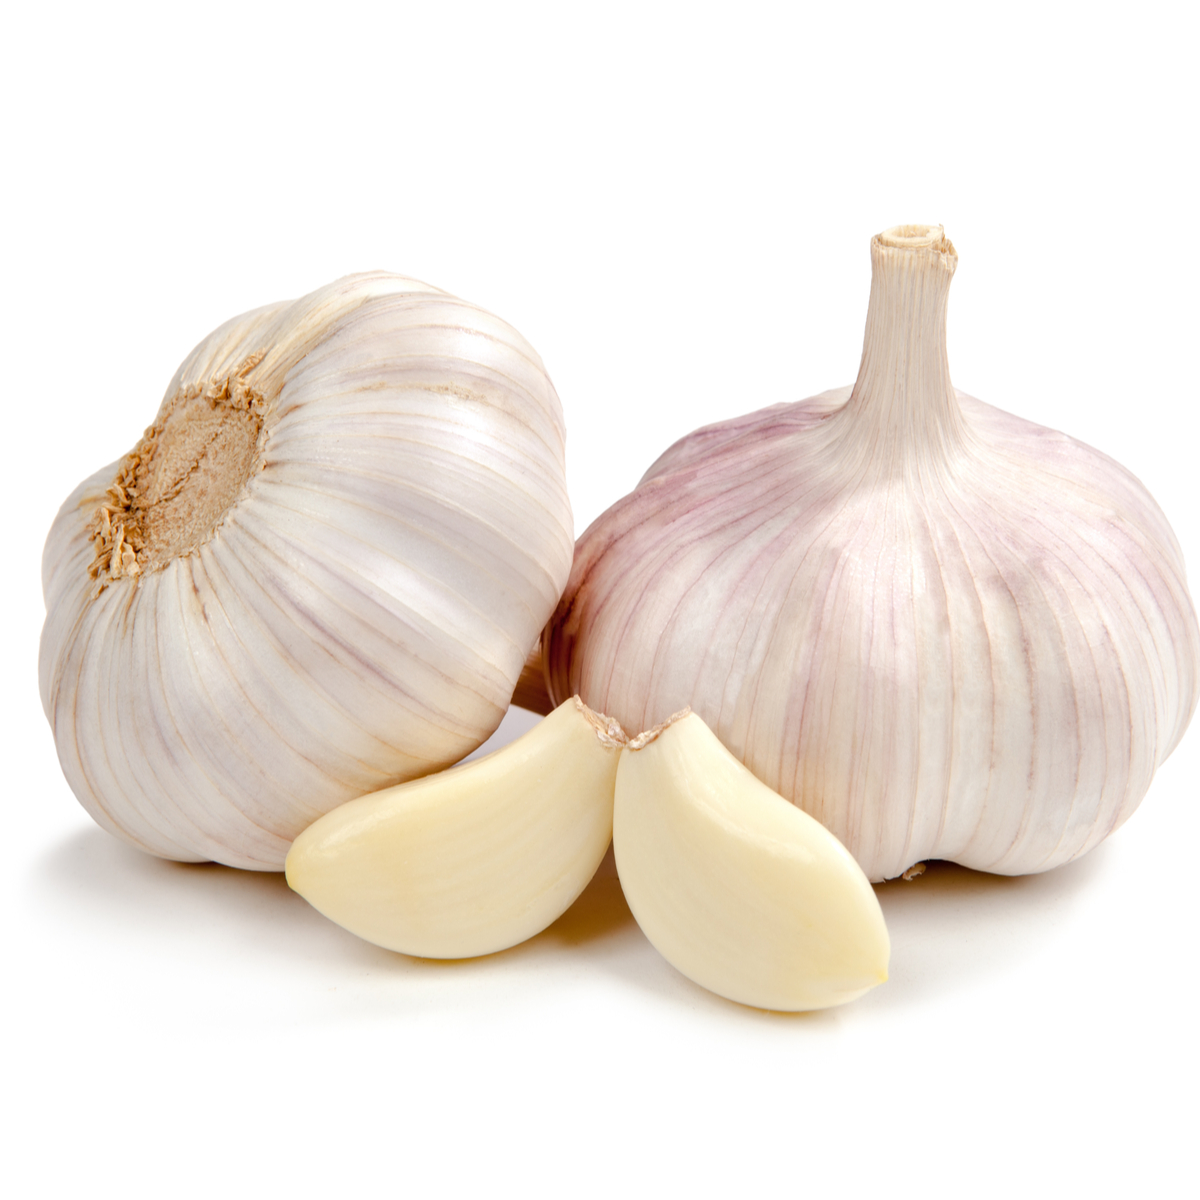 Garlic 250g